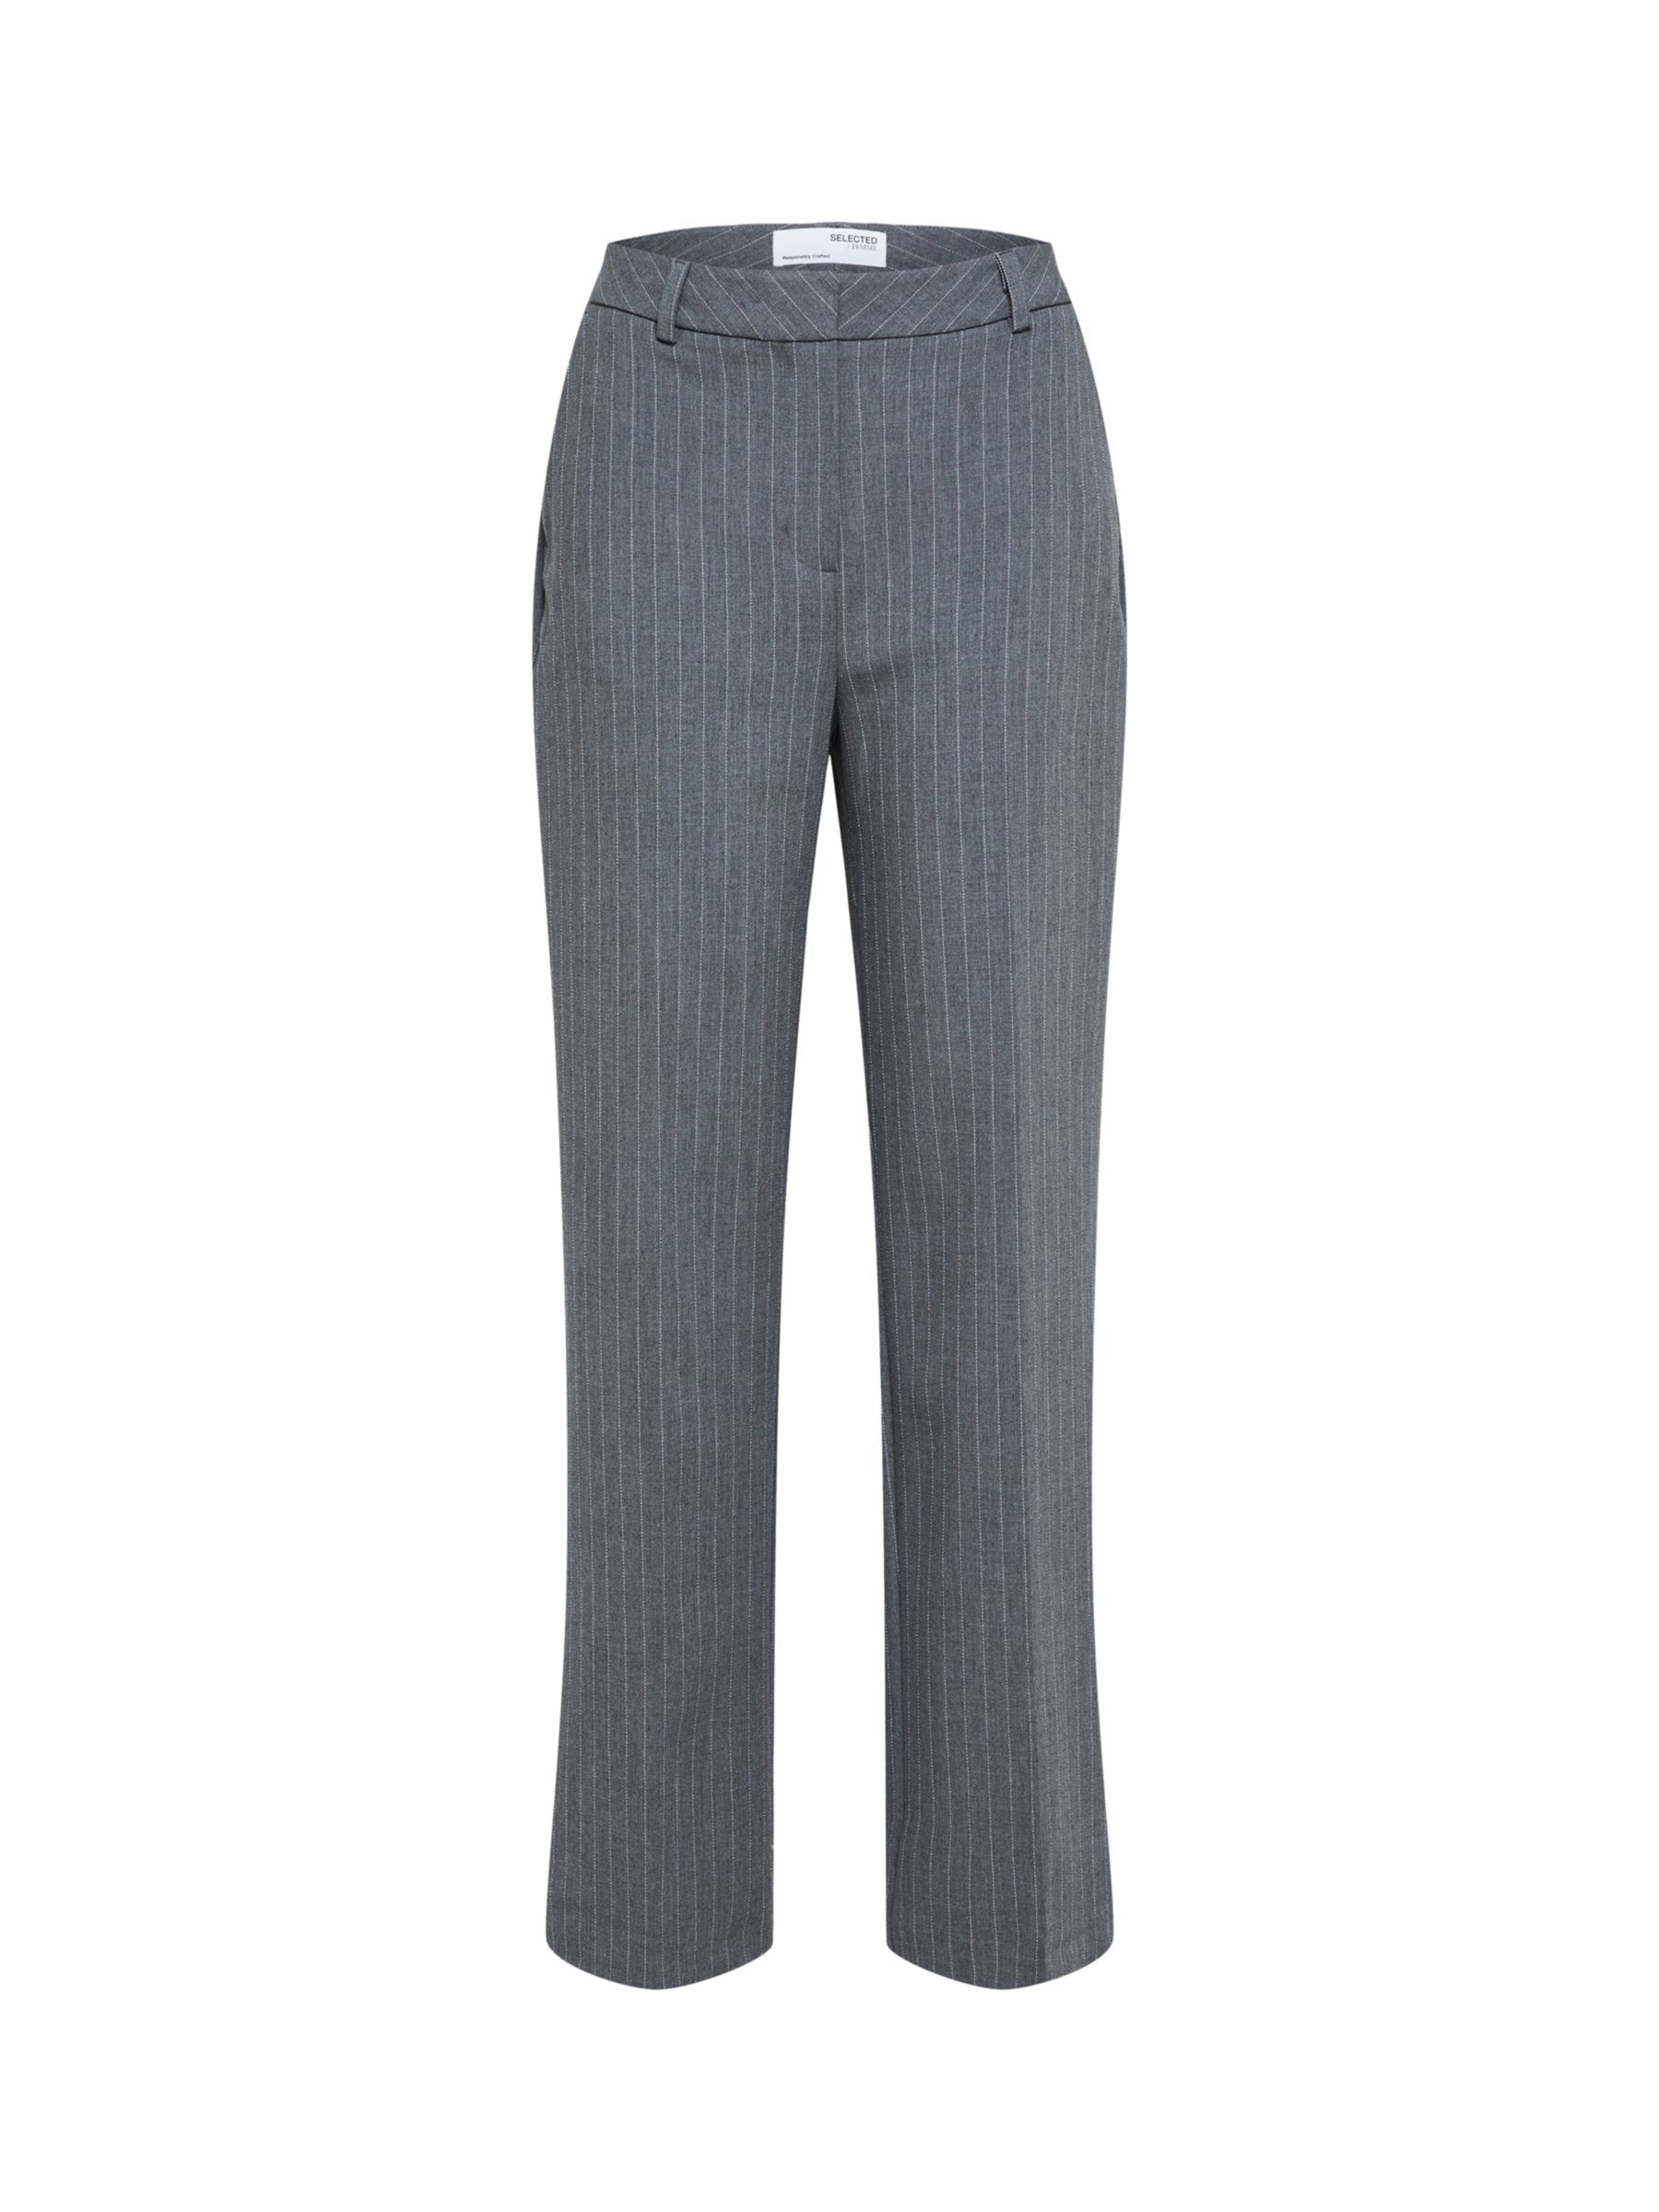 SELECTED FEMME Pinstripe Trousers, Grey Melange, 36